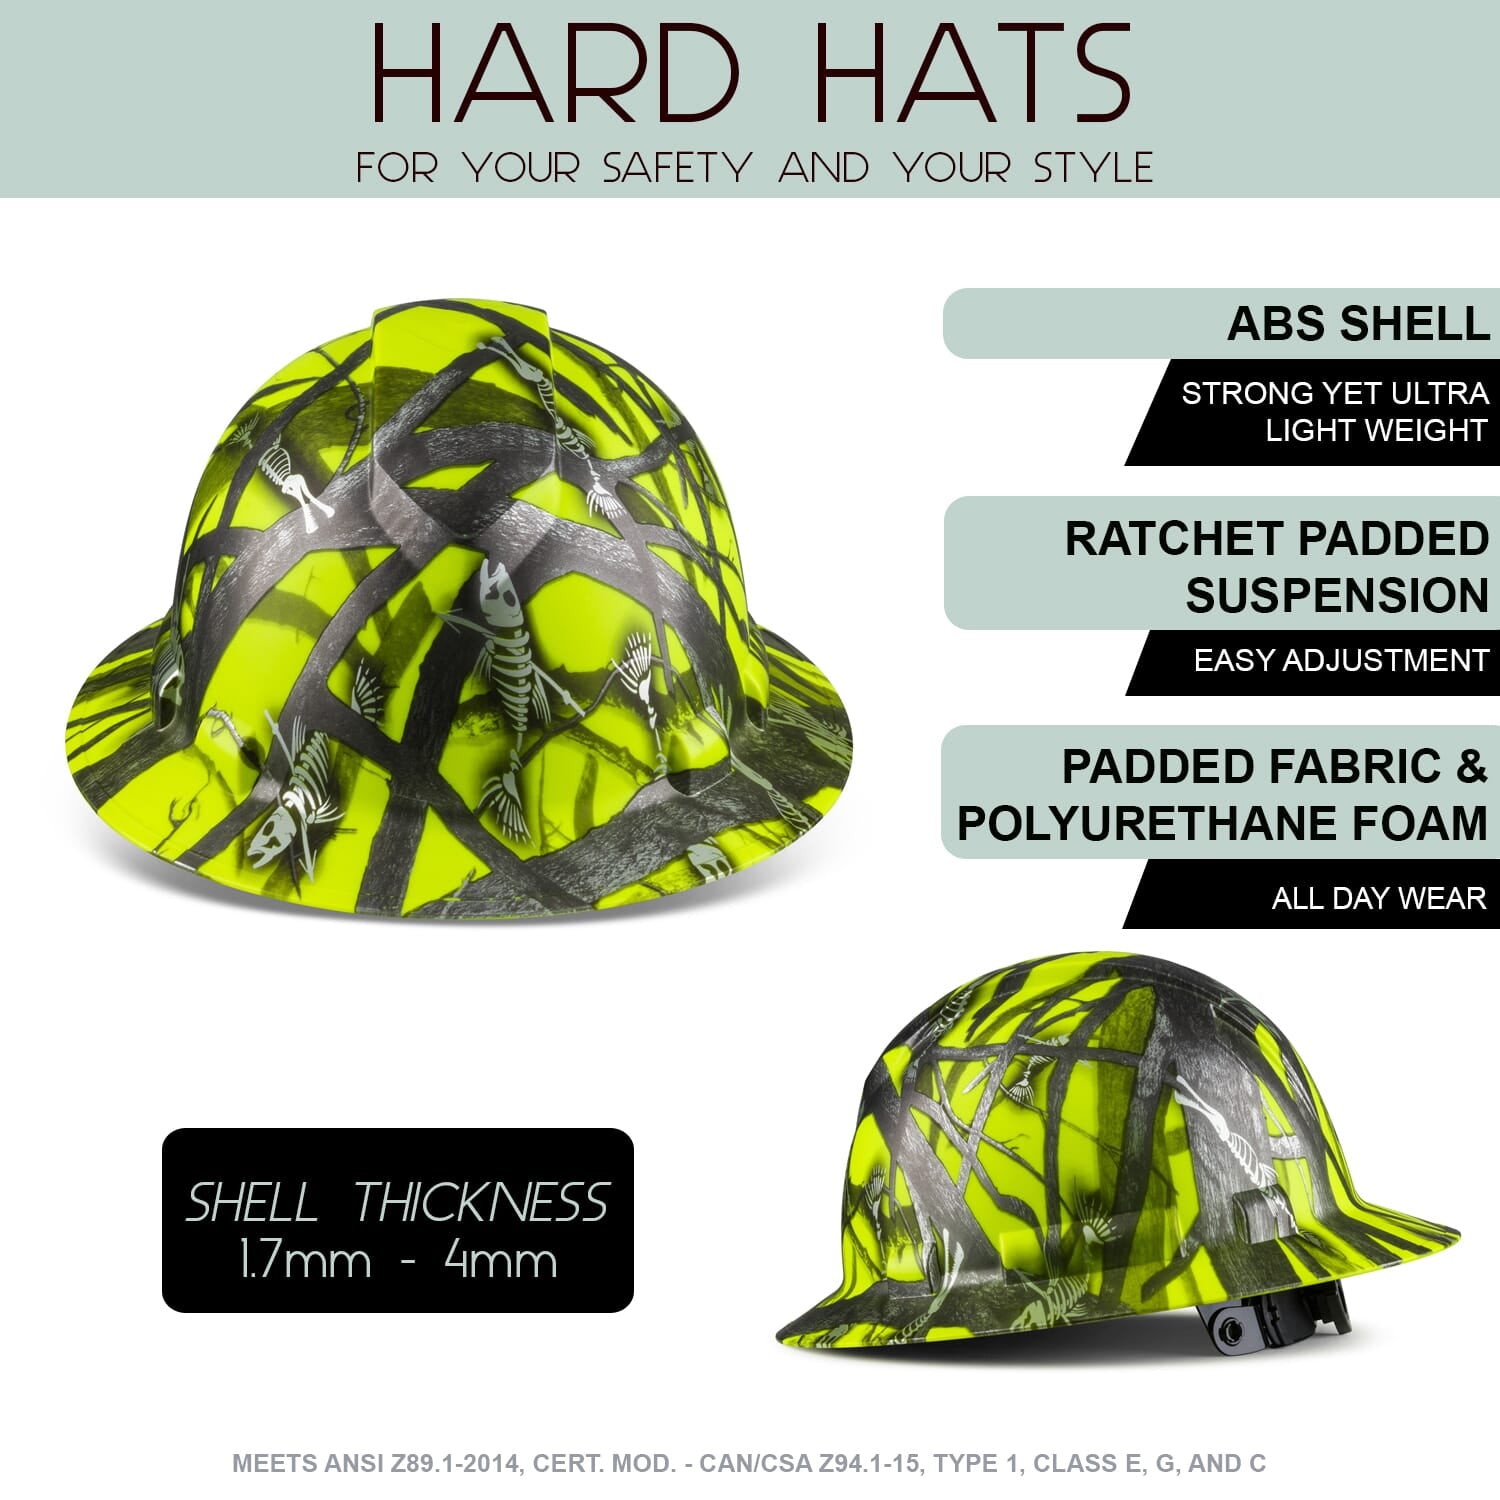 Full Brim Pyramex Hi Vis Lime Hard Hat, Custom Fishbone Design, Safety Helmet, 6 Point